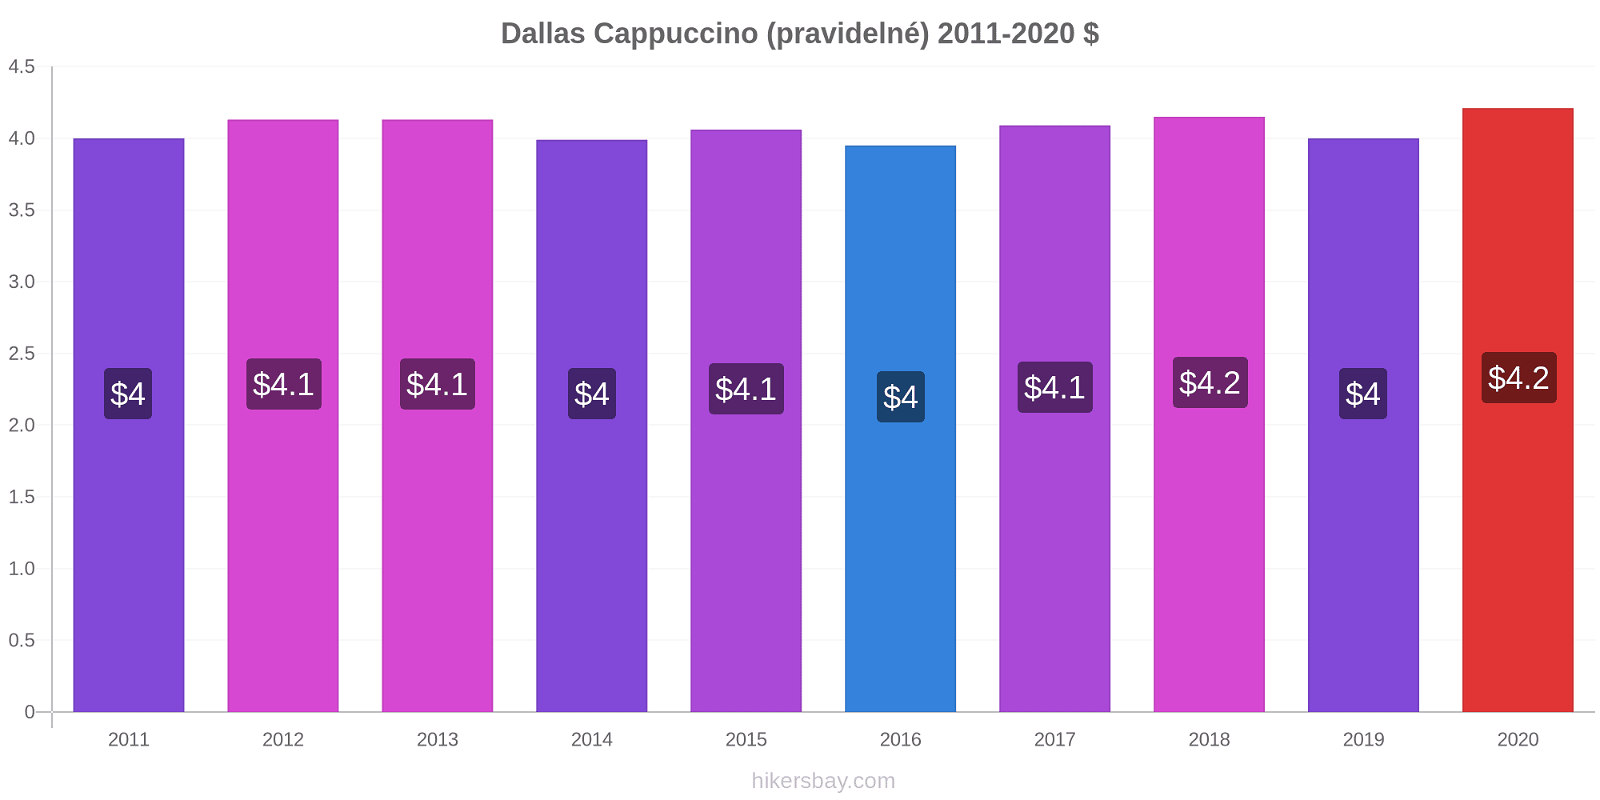 Dallas změny cen Cappuccino (pravidelné) hikersbay.com